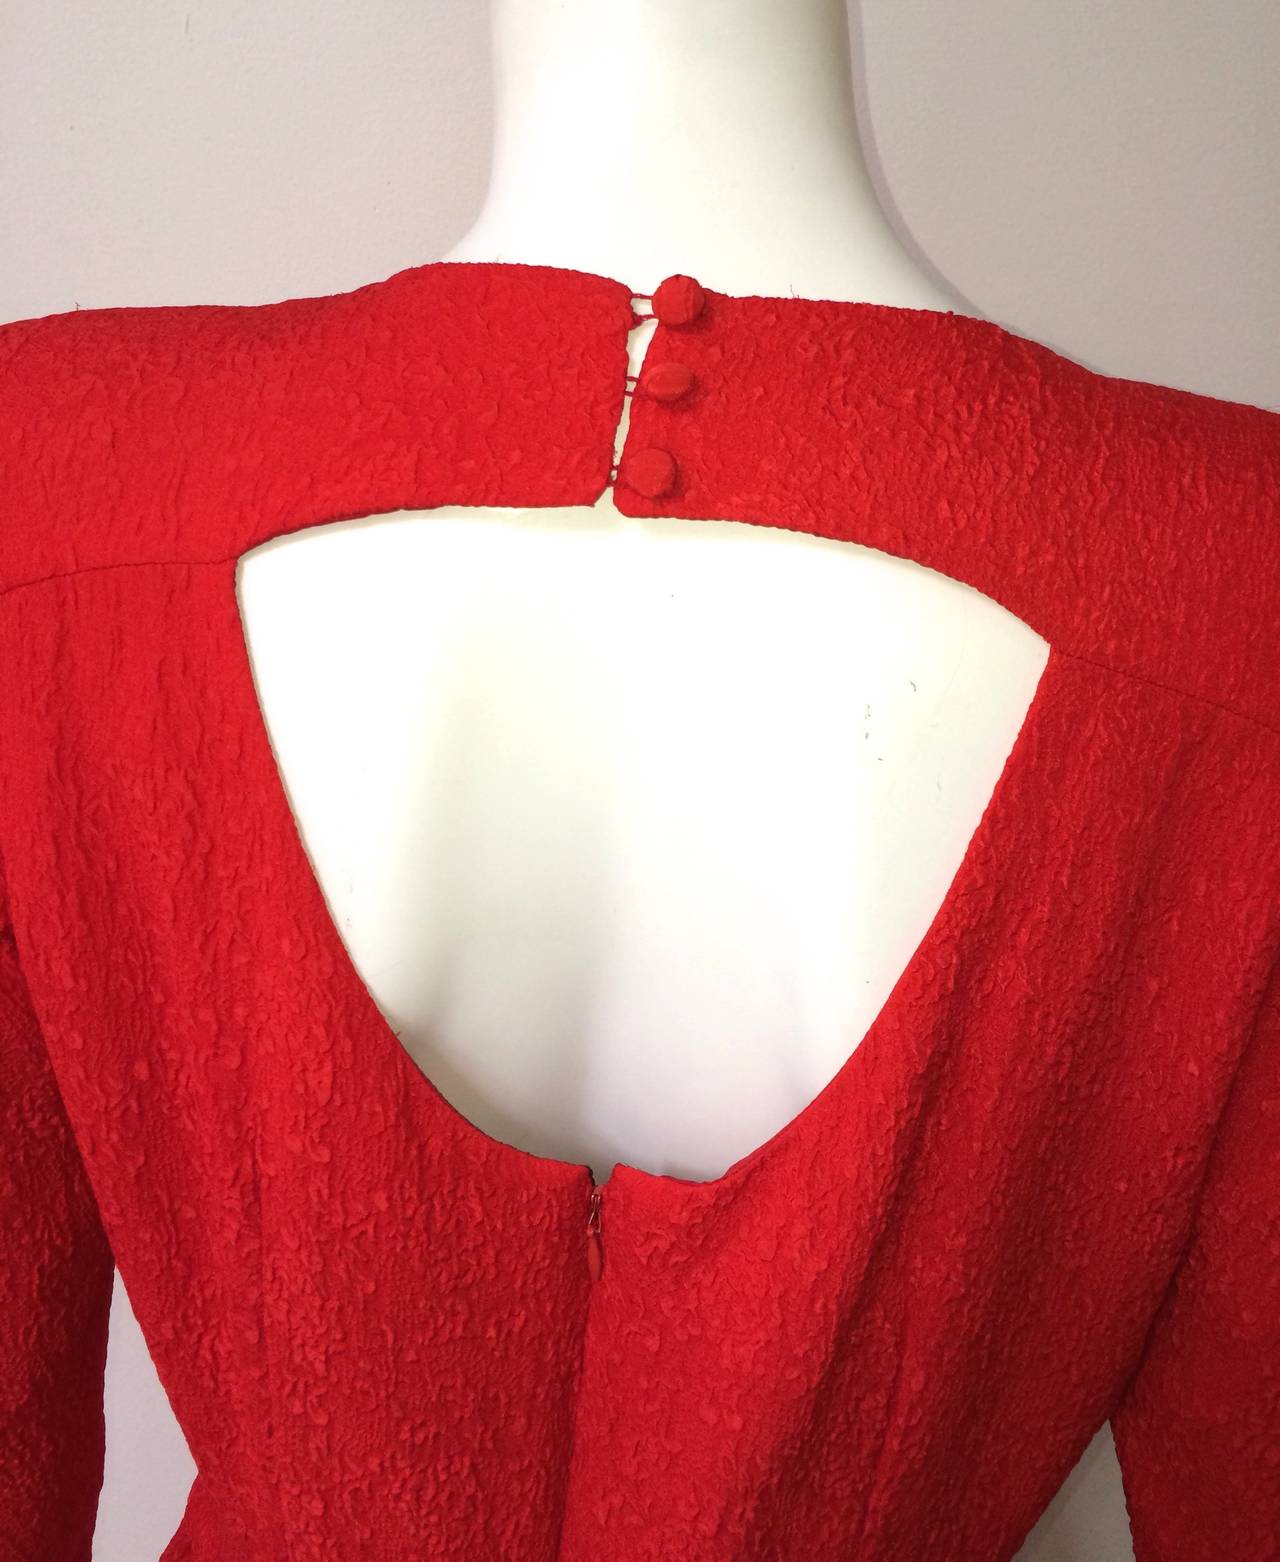 Red SALE Carolina Herrera for Bergdorf Goodman 80s silk dress size 10/12.